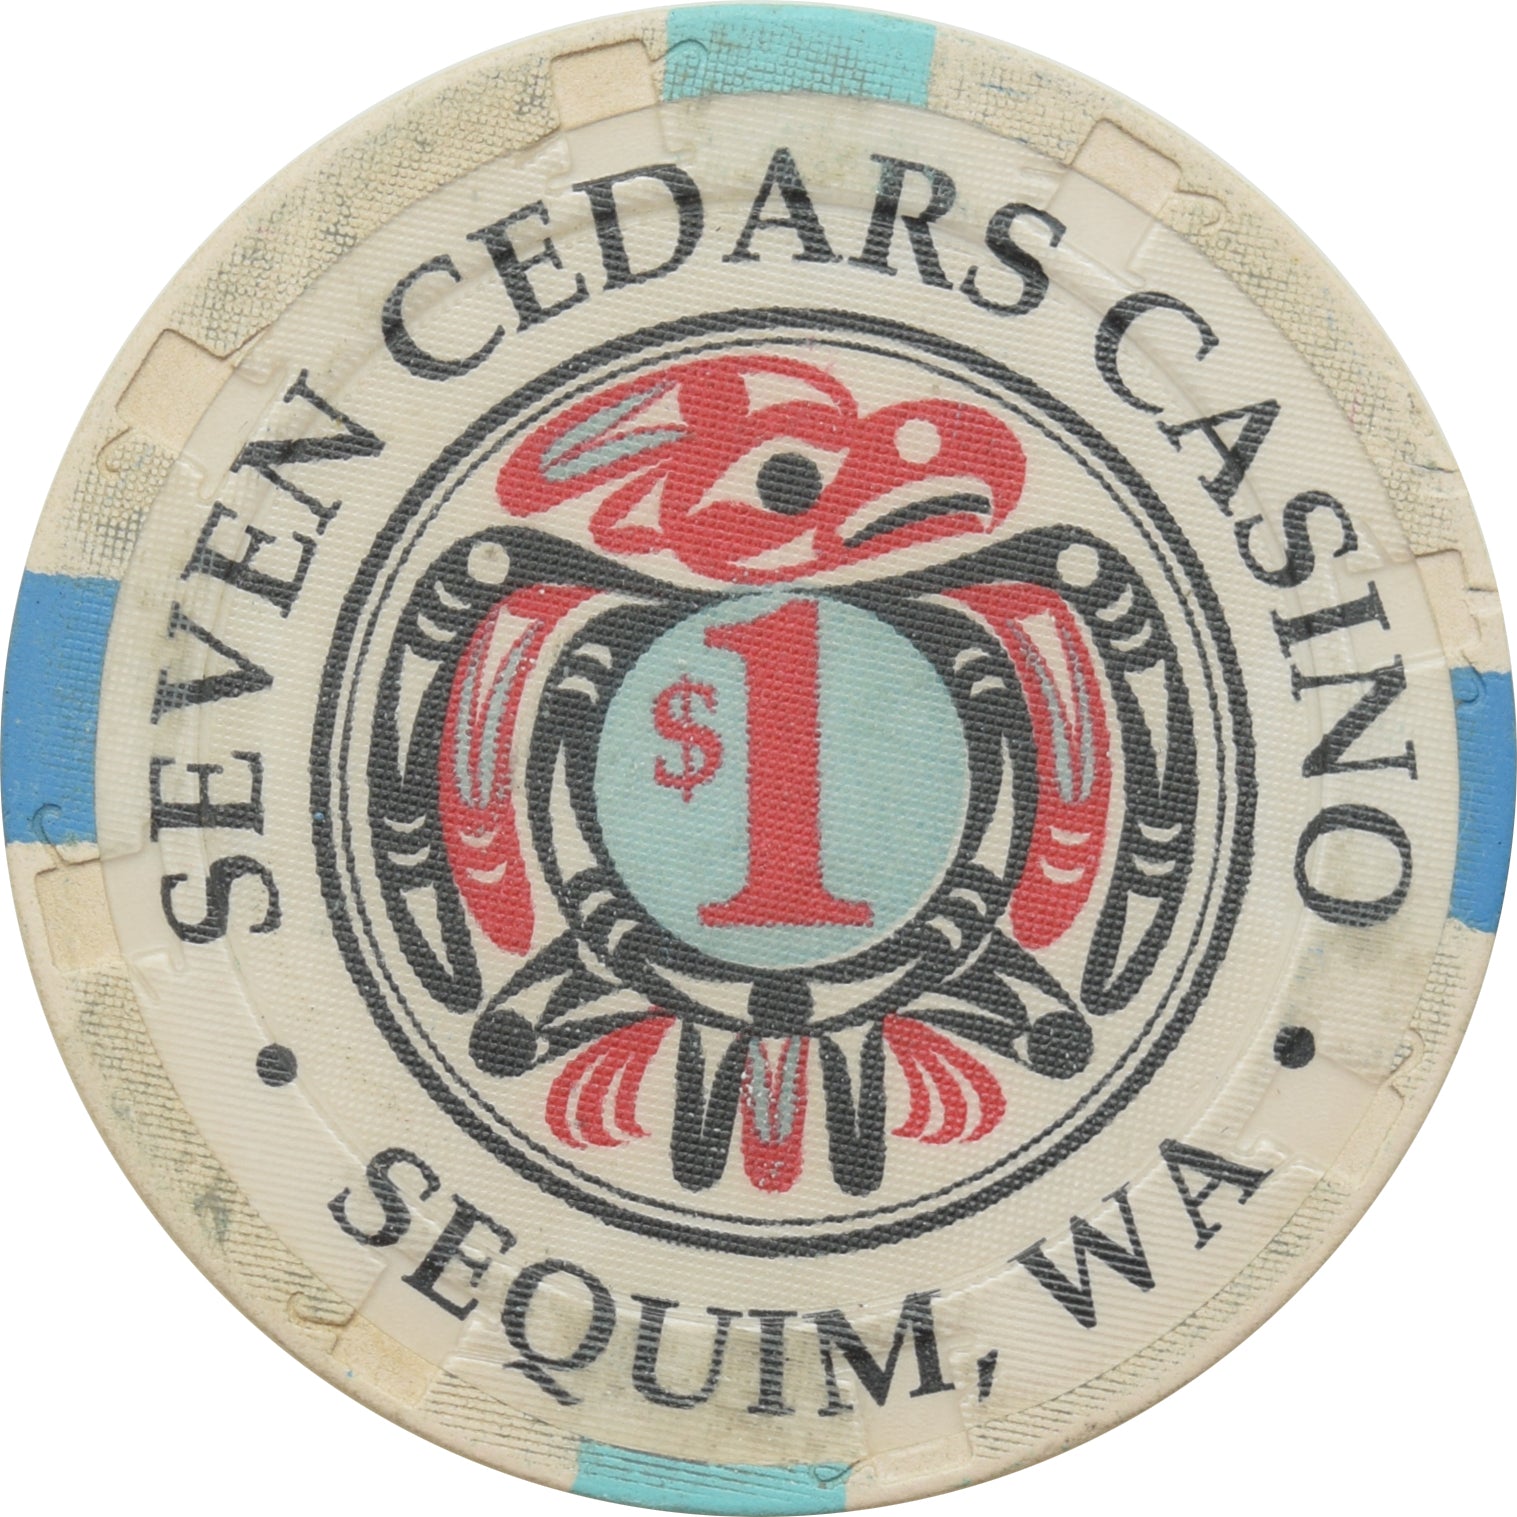 seven cedars casino hours